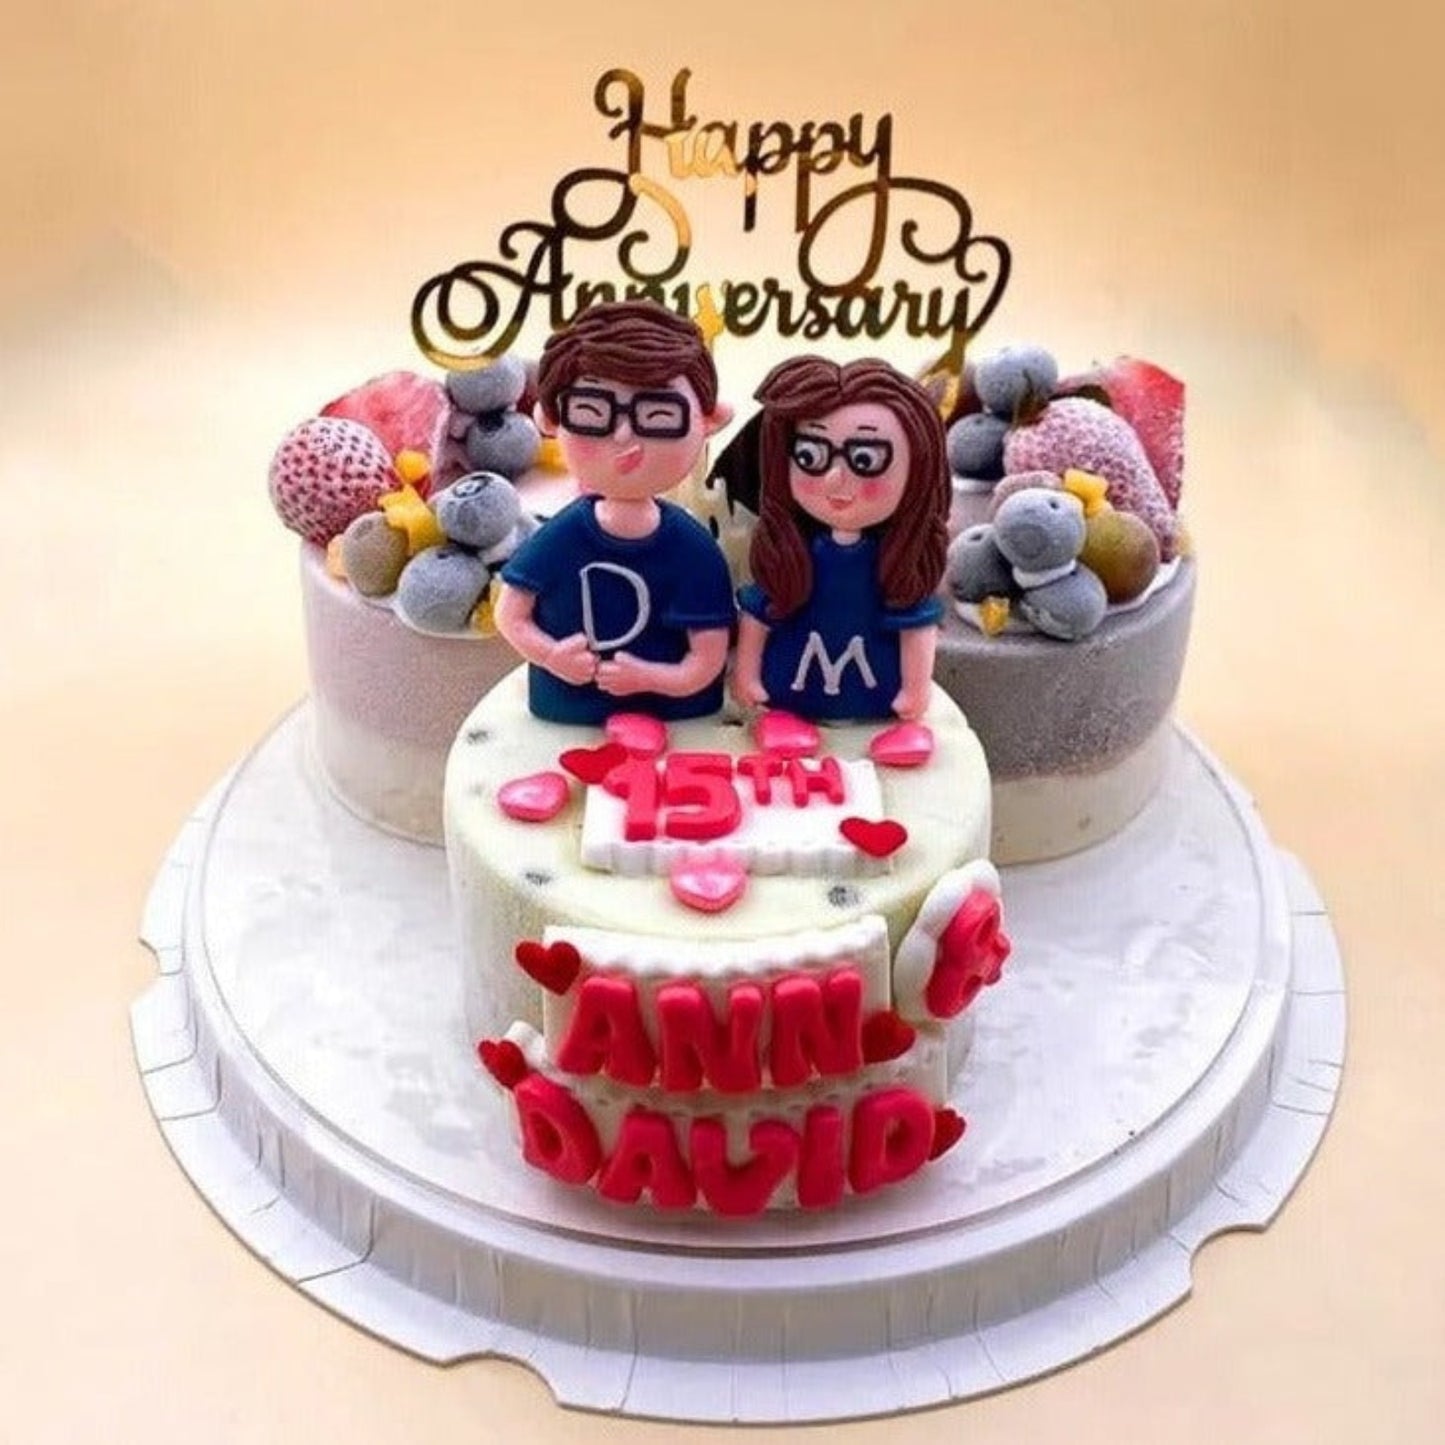 15th Marriage Anniversary Cake